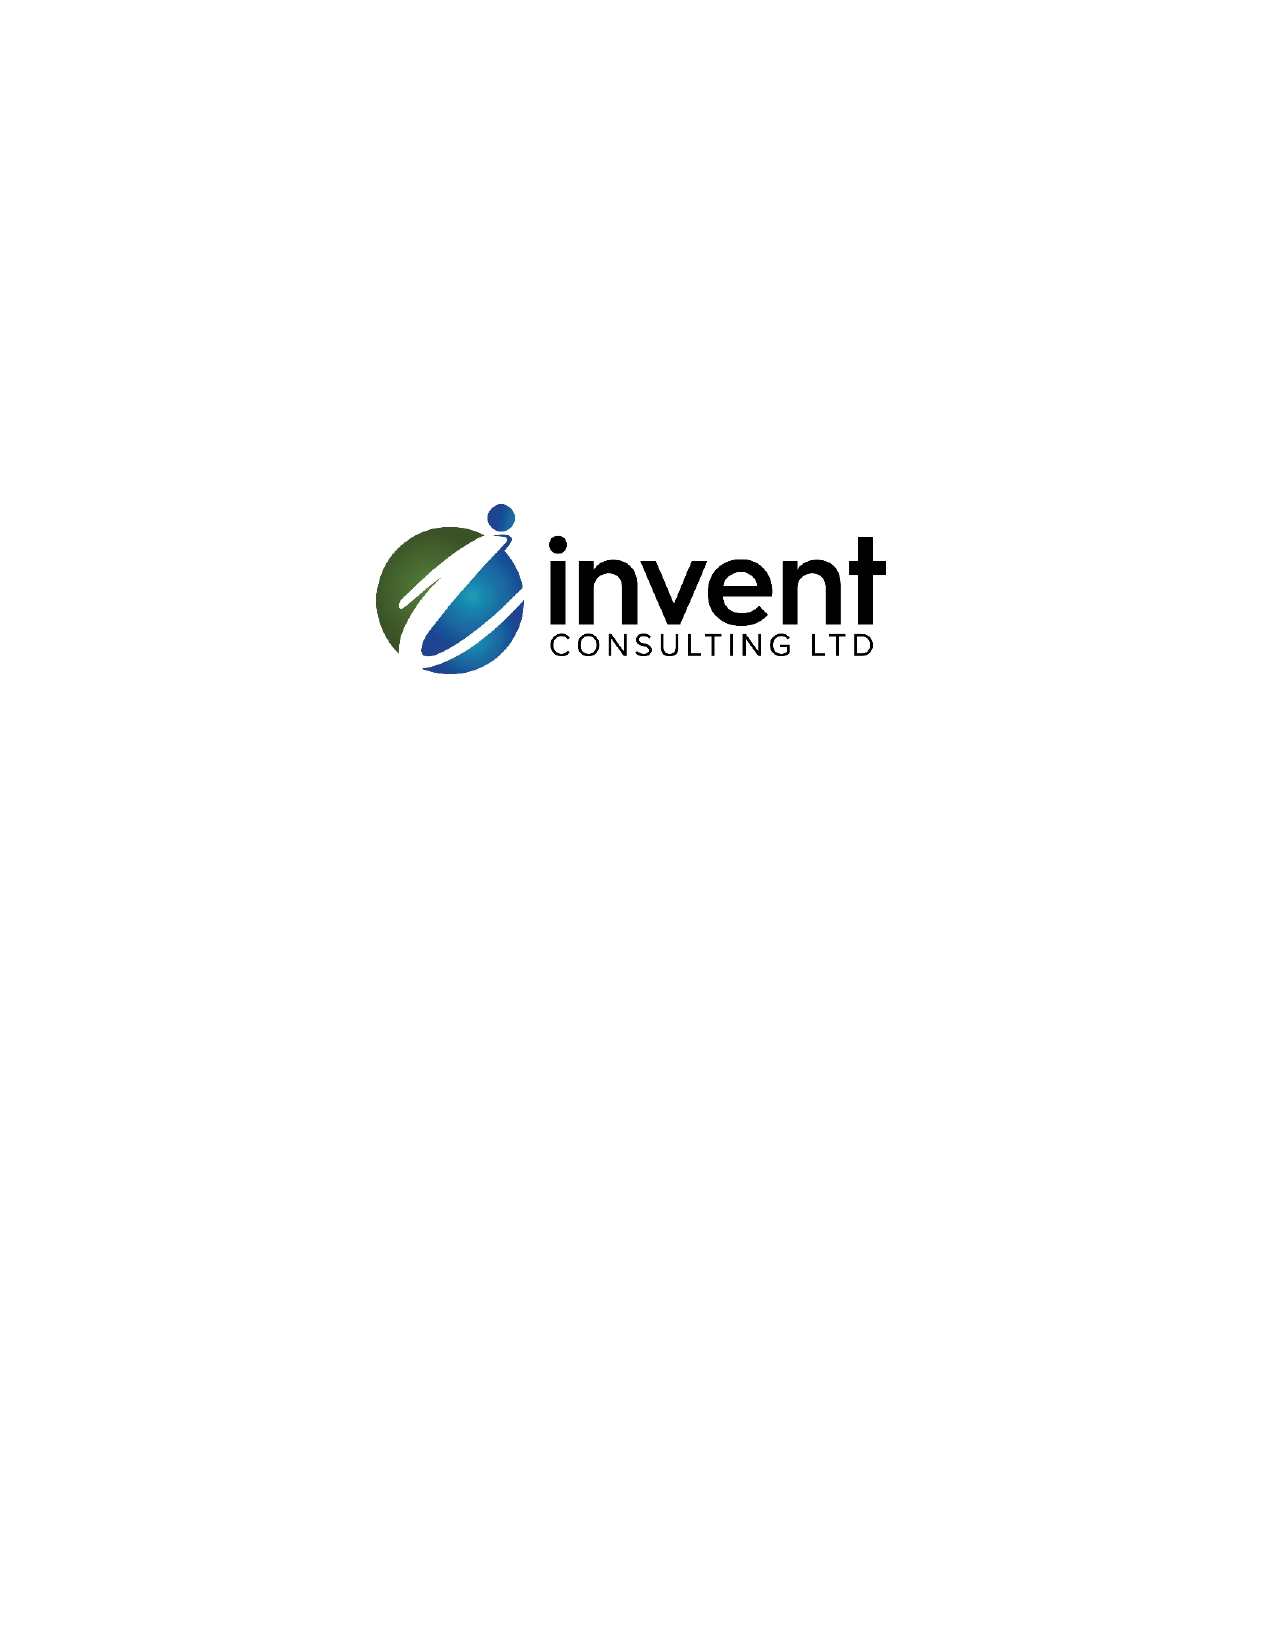 Invent Consulting Limited in Elioplus